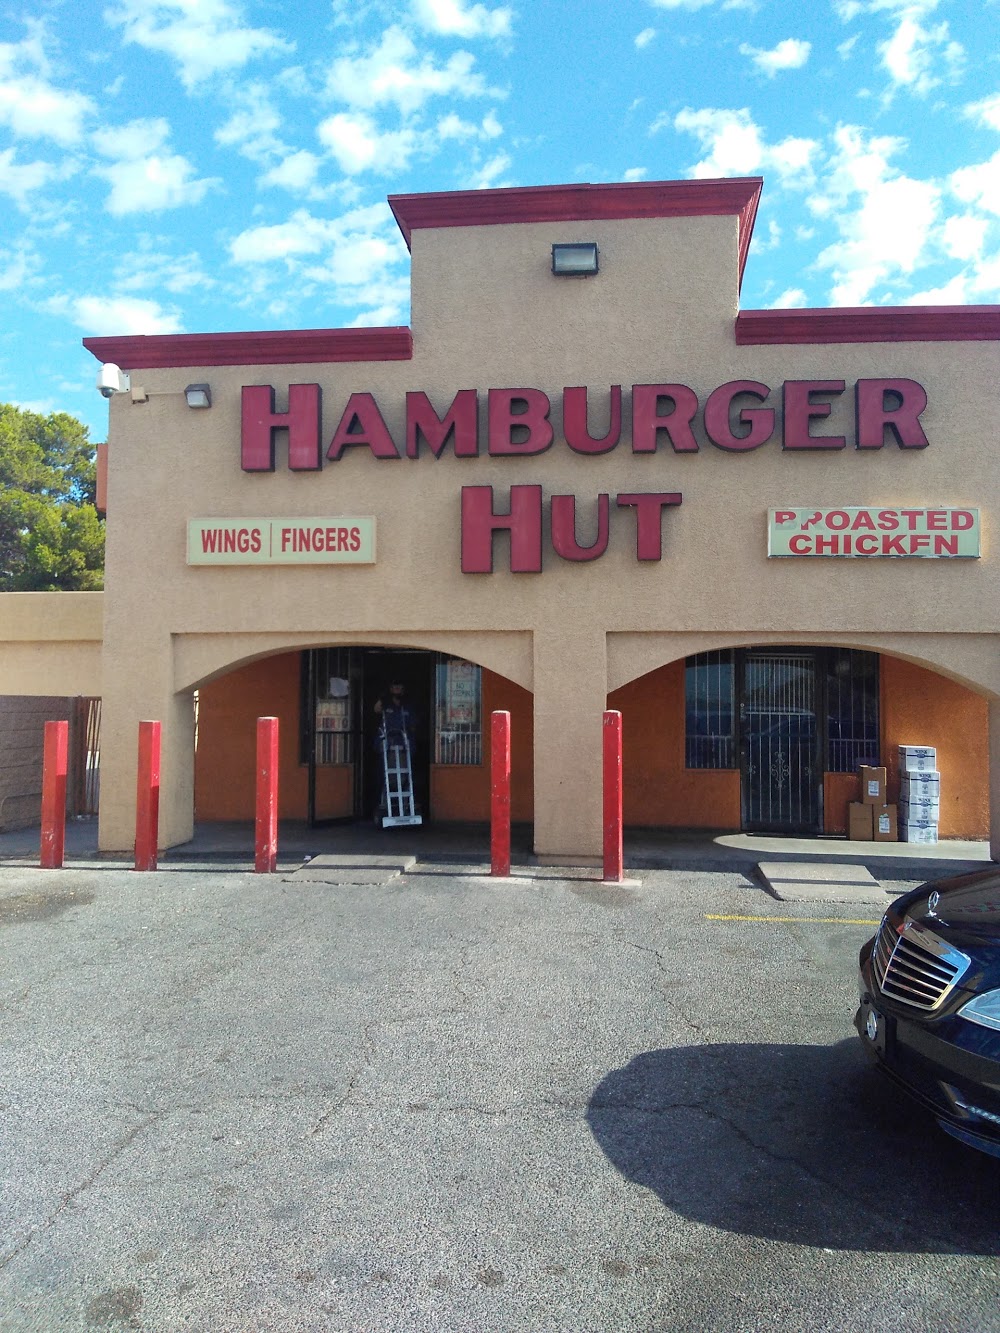 Hamburger Hut